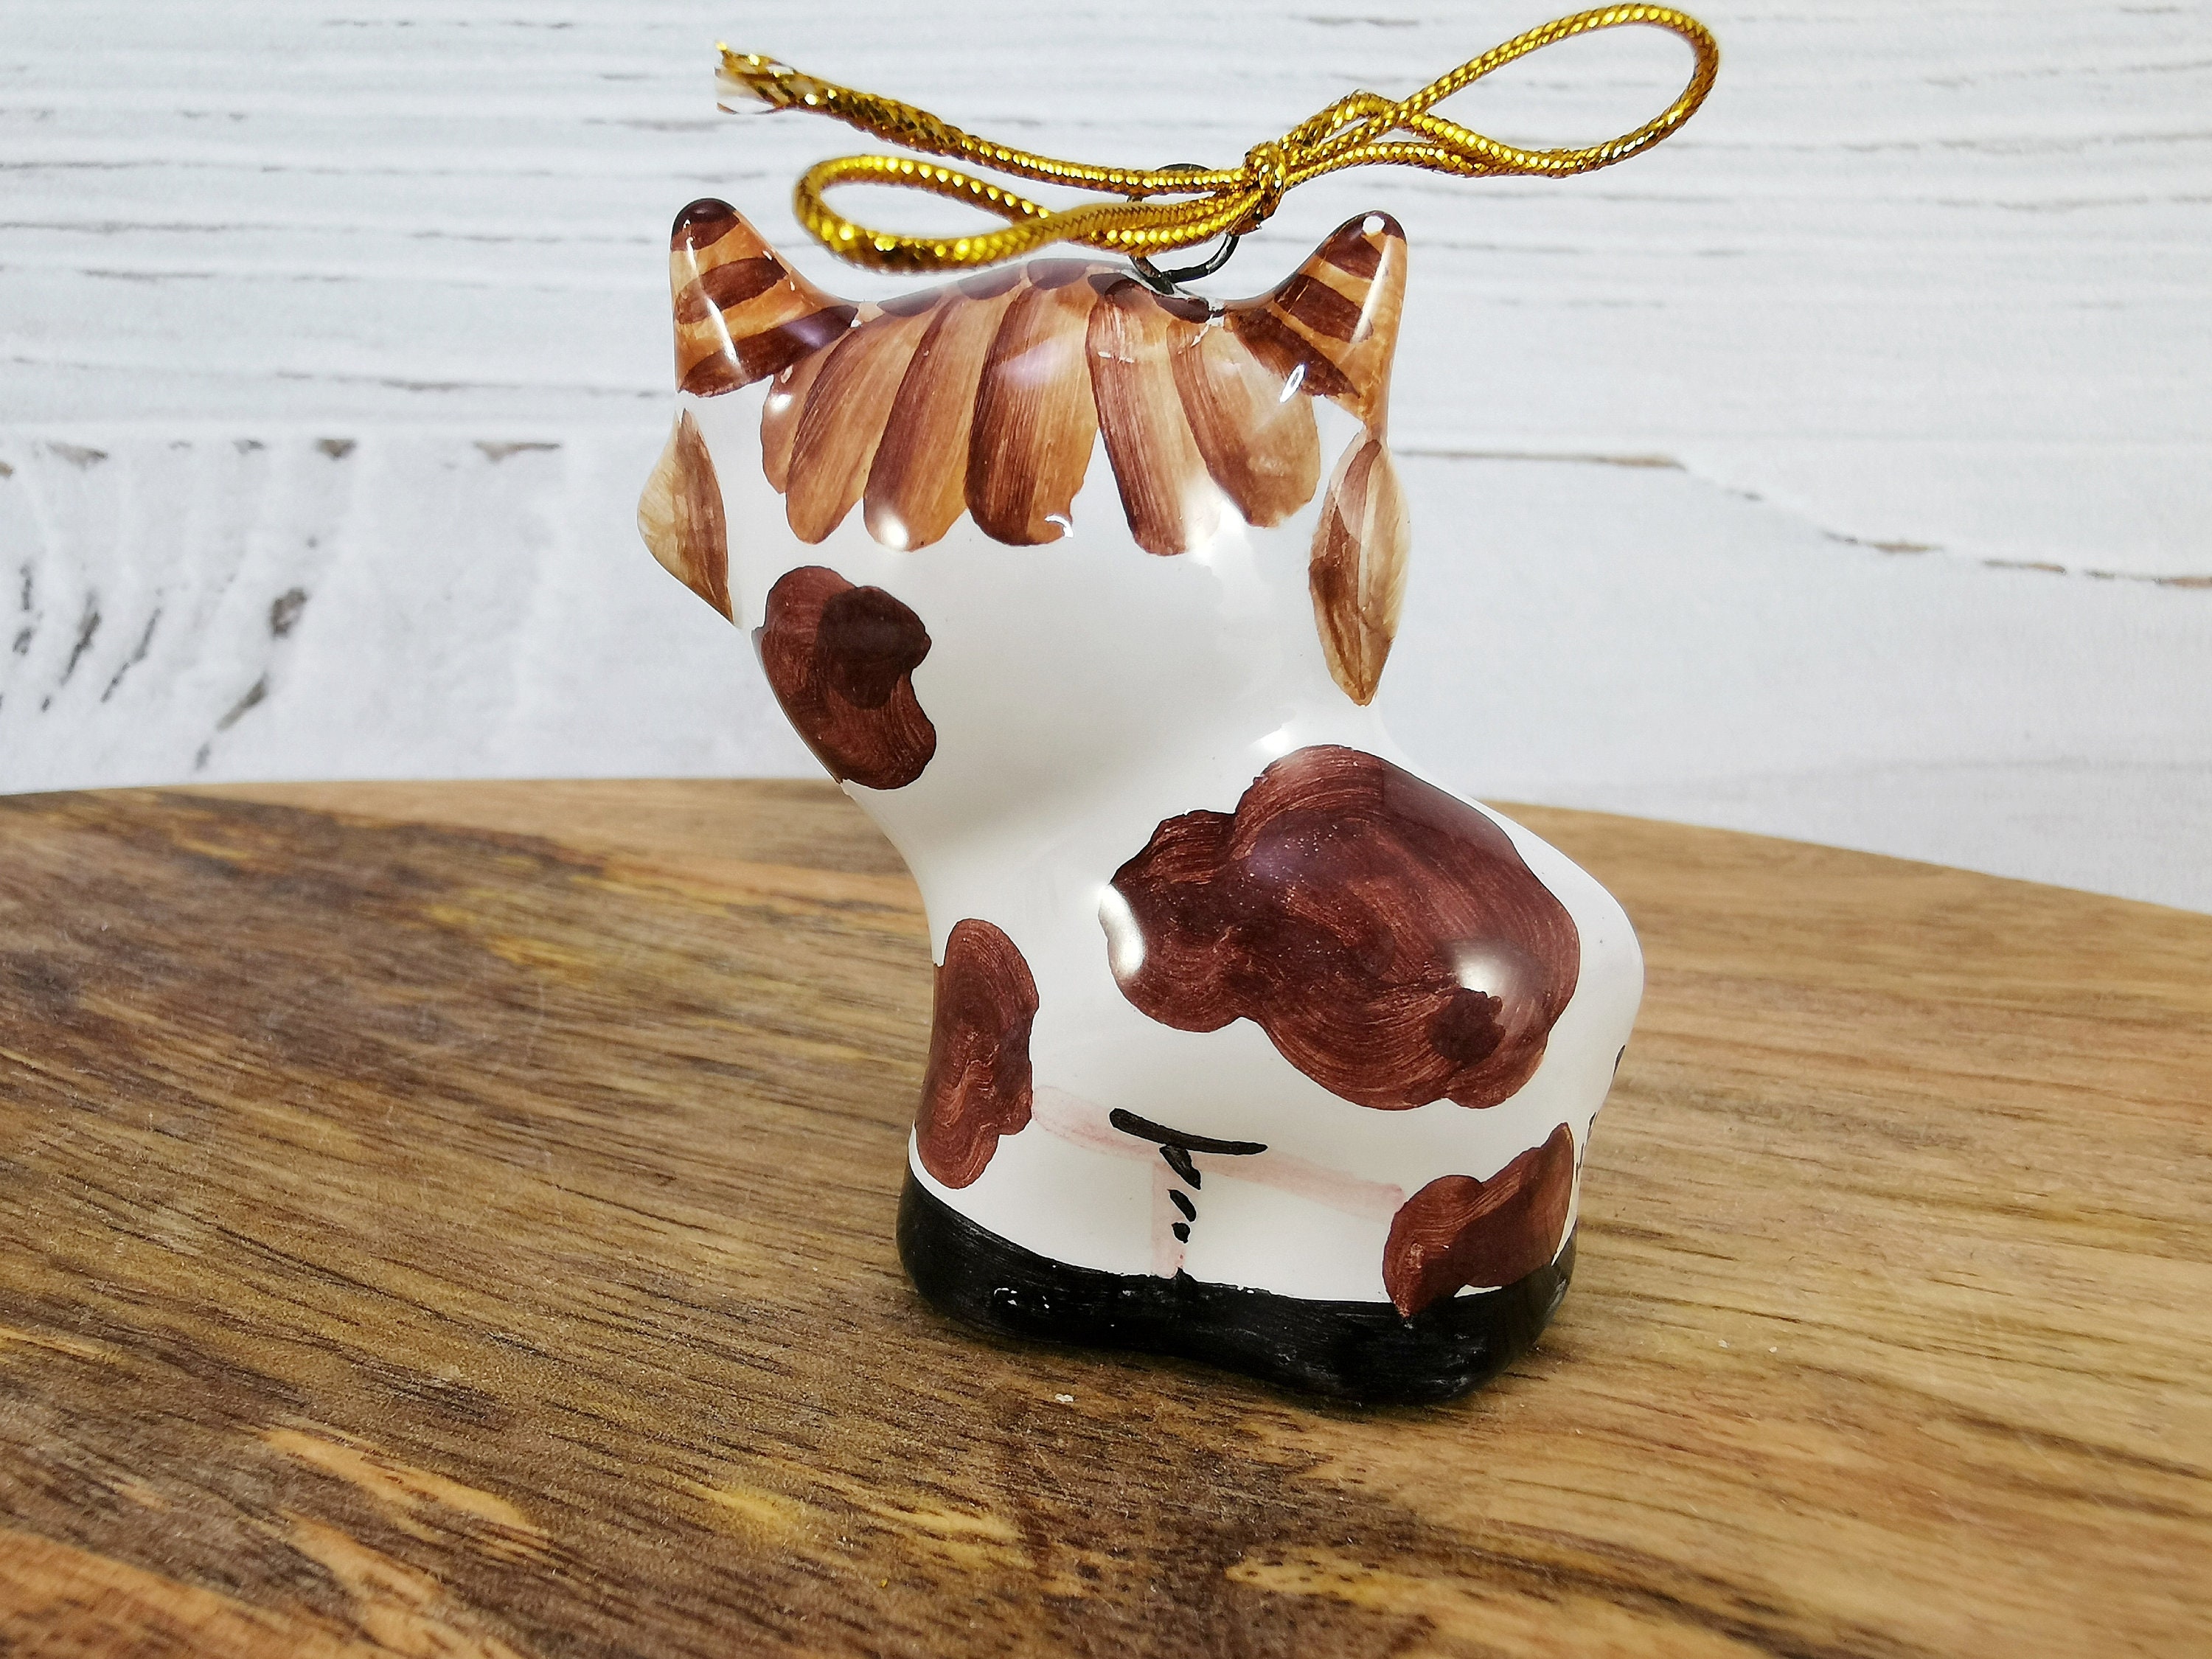 Ceramic cow ornament / Porcelain bull figurine / Majolica | Etsy